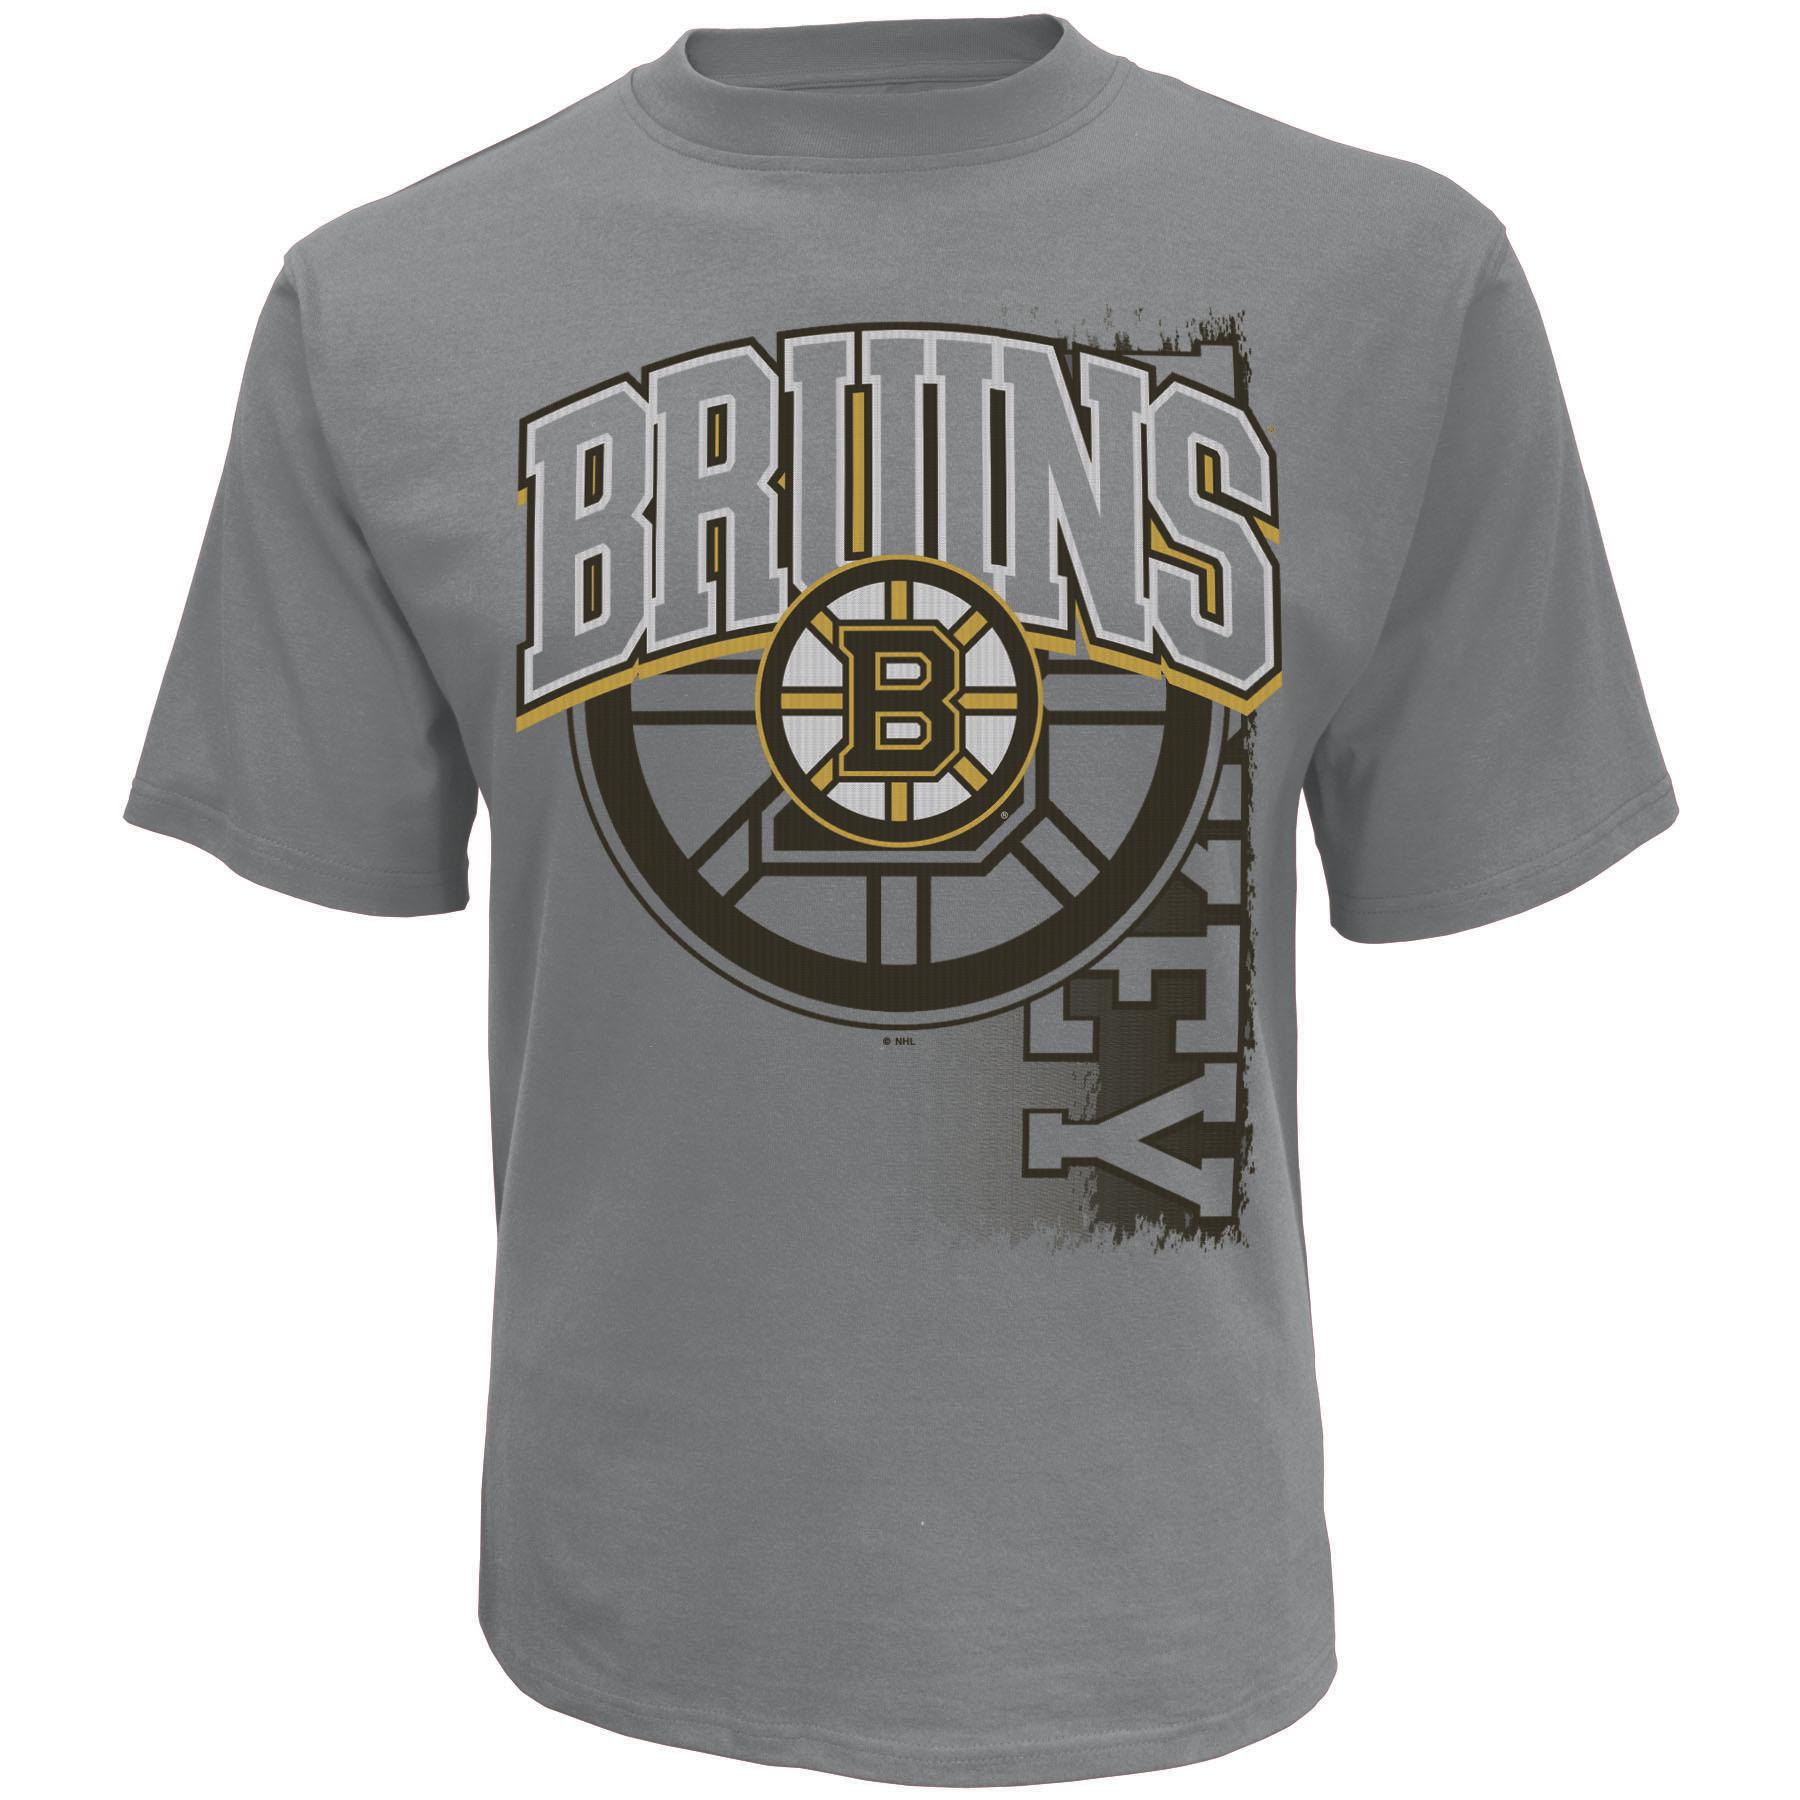 NHL Men's Big & Tall Graphic T-Shirt - Boston Bruins